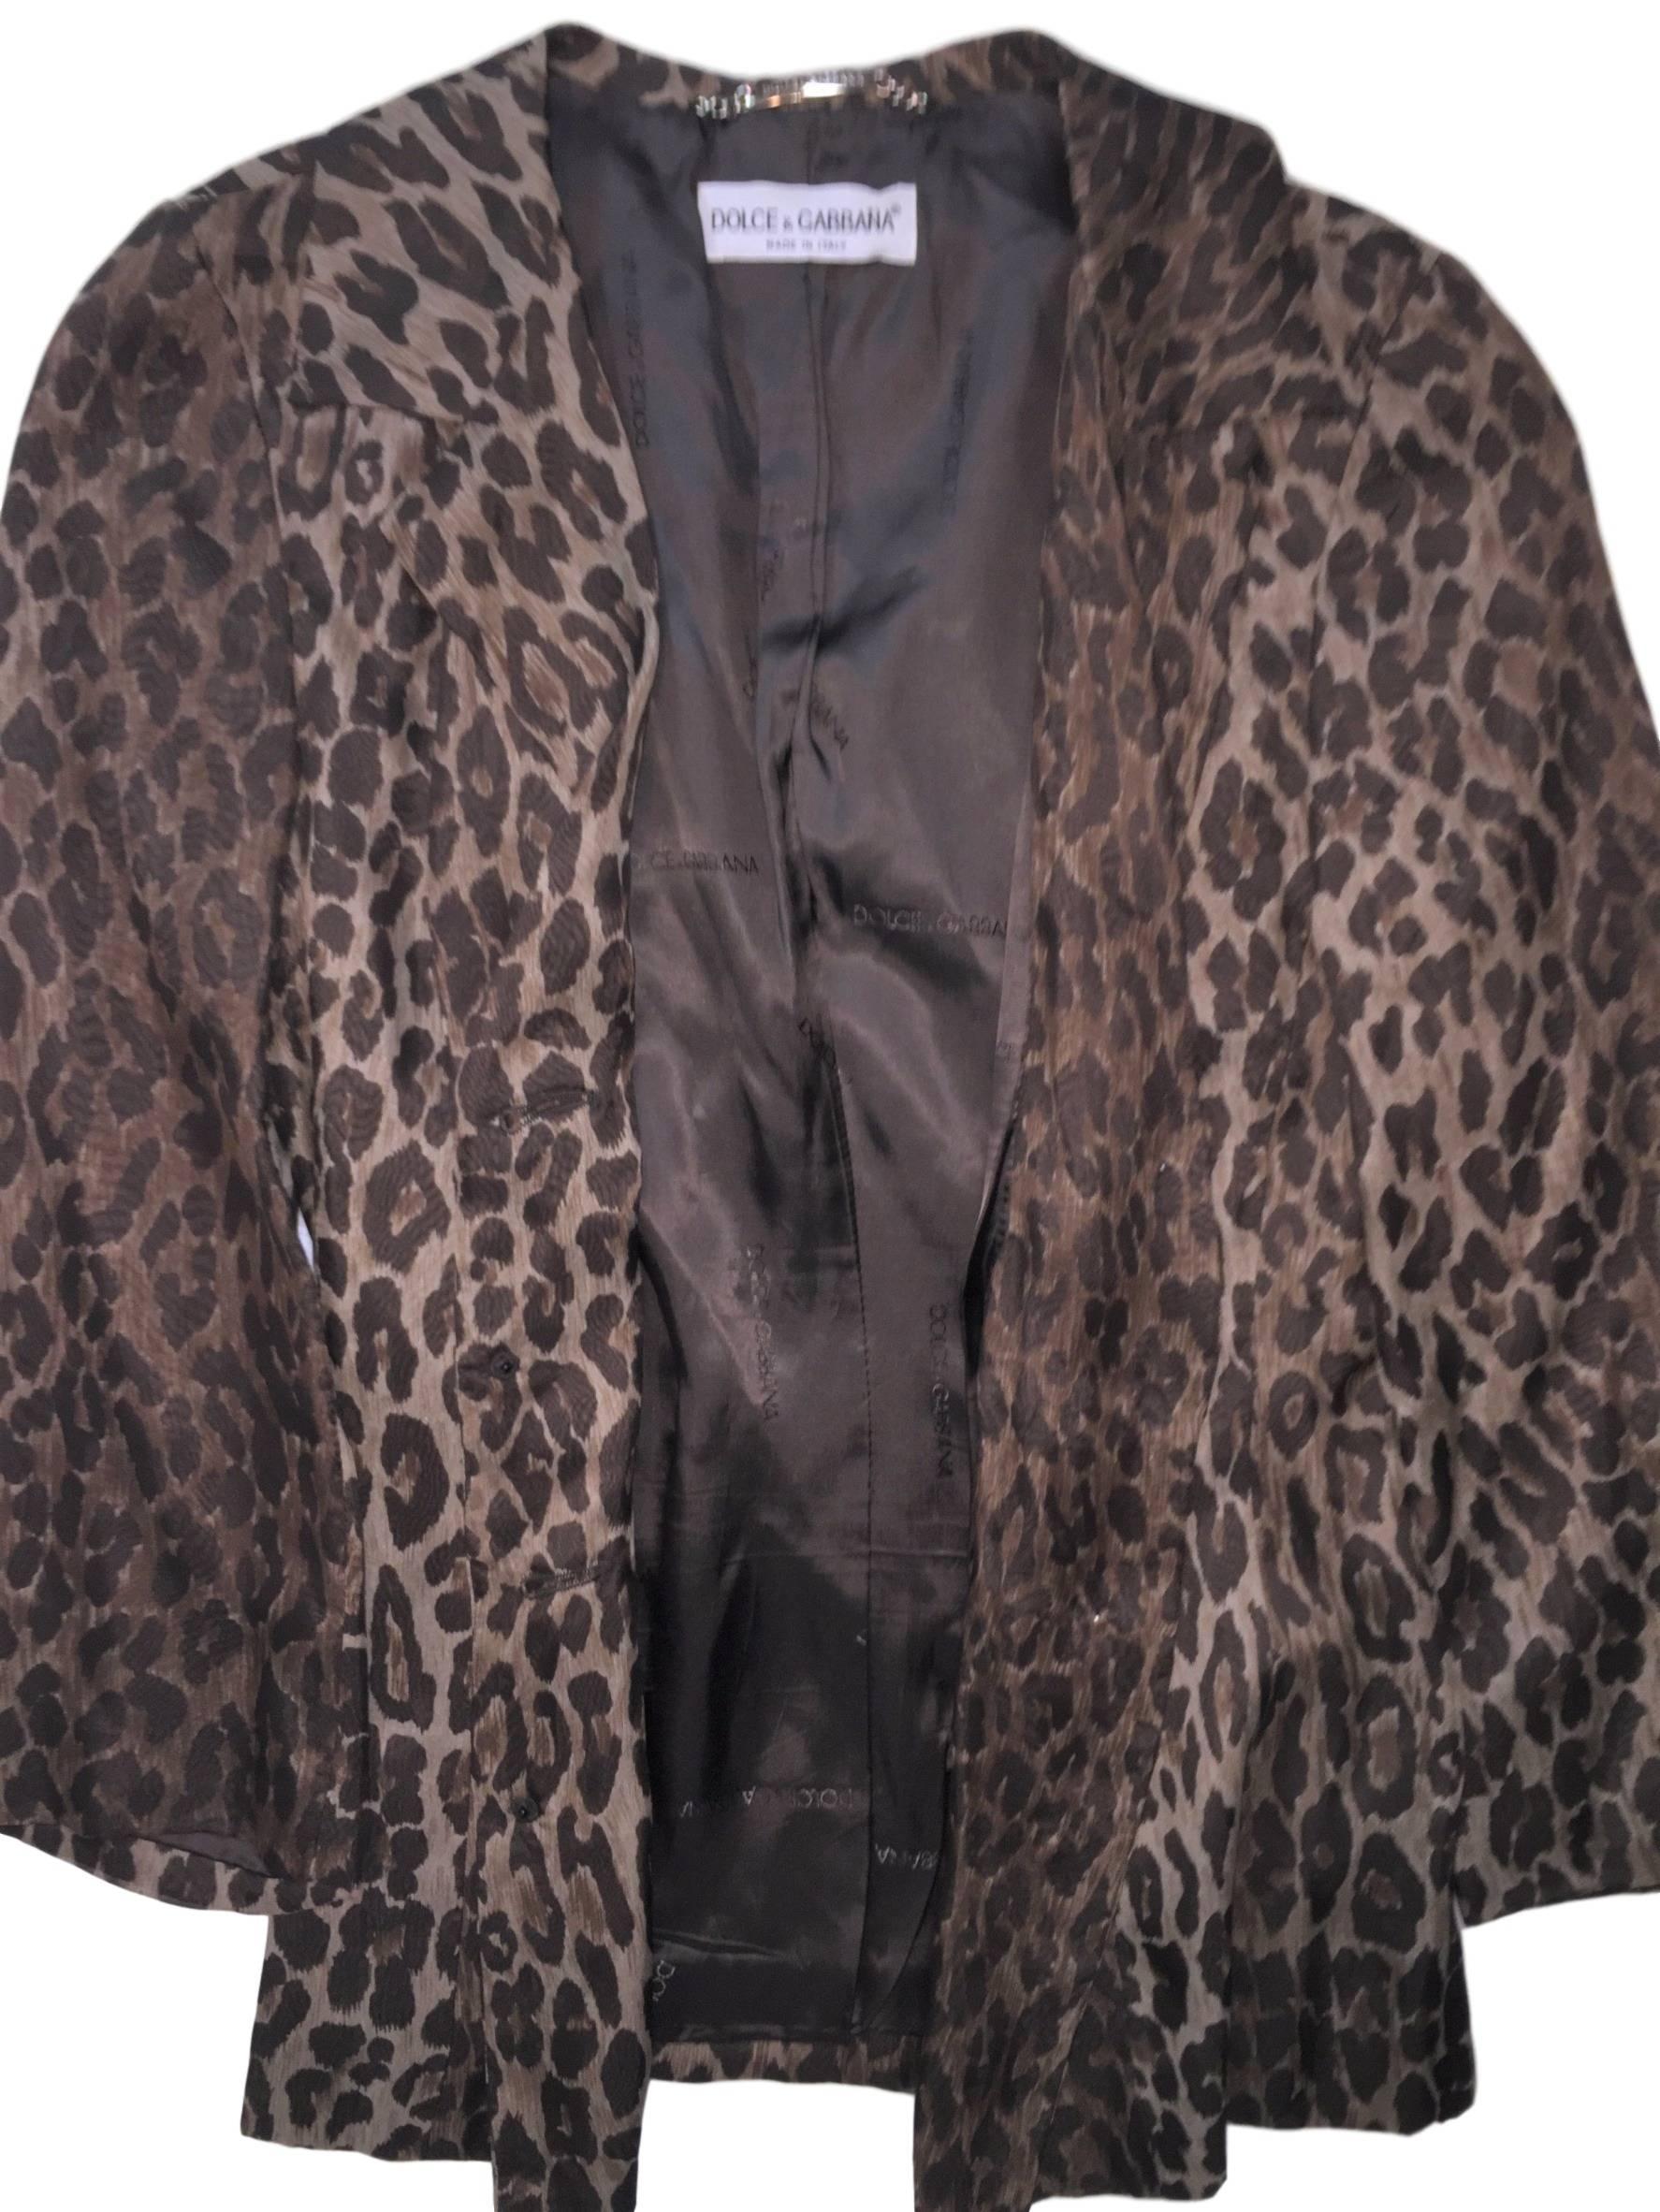 Women's S/S 1997 Dolce & Gabbana Runway Leopard Silk Sheer Skirt Jacket Suit